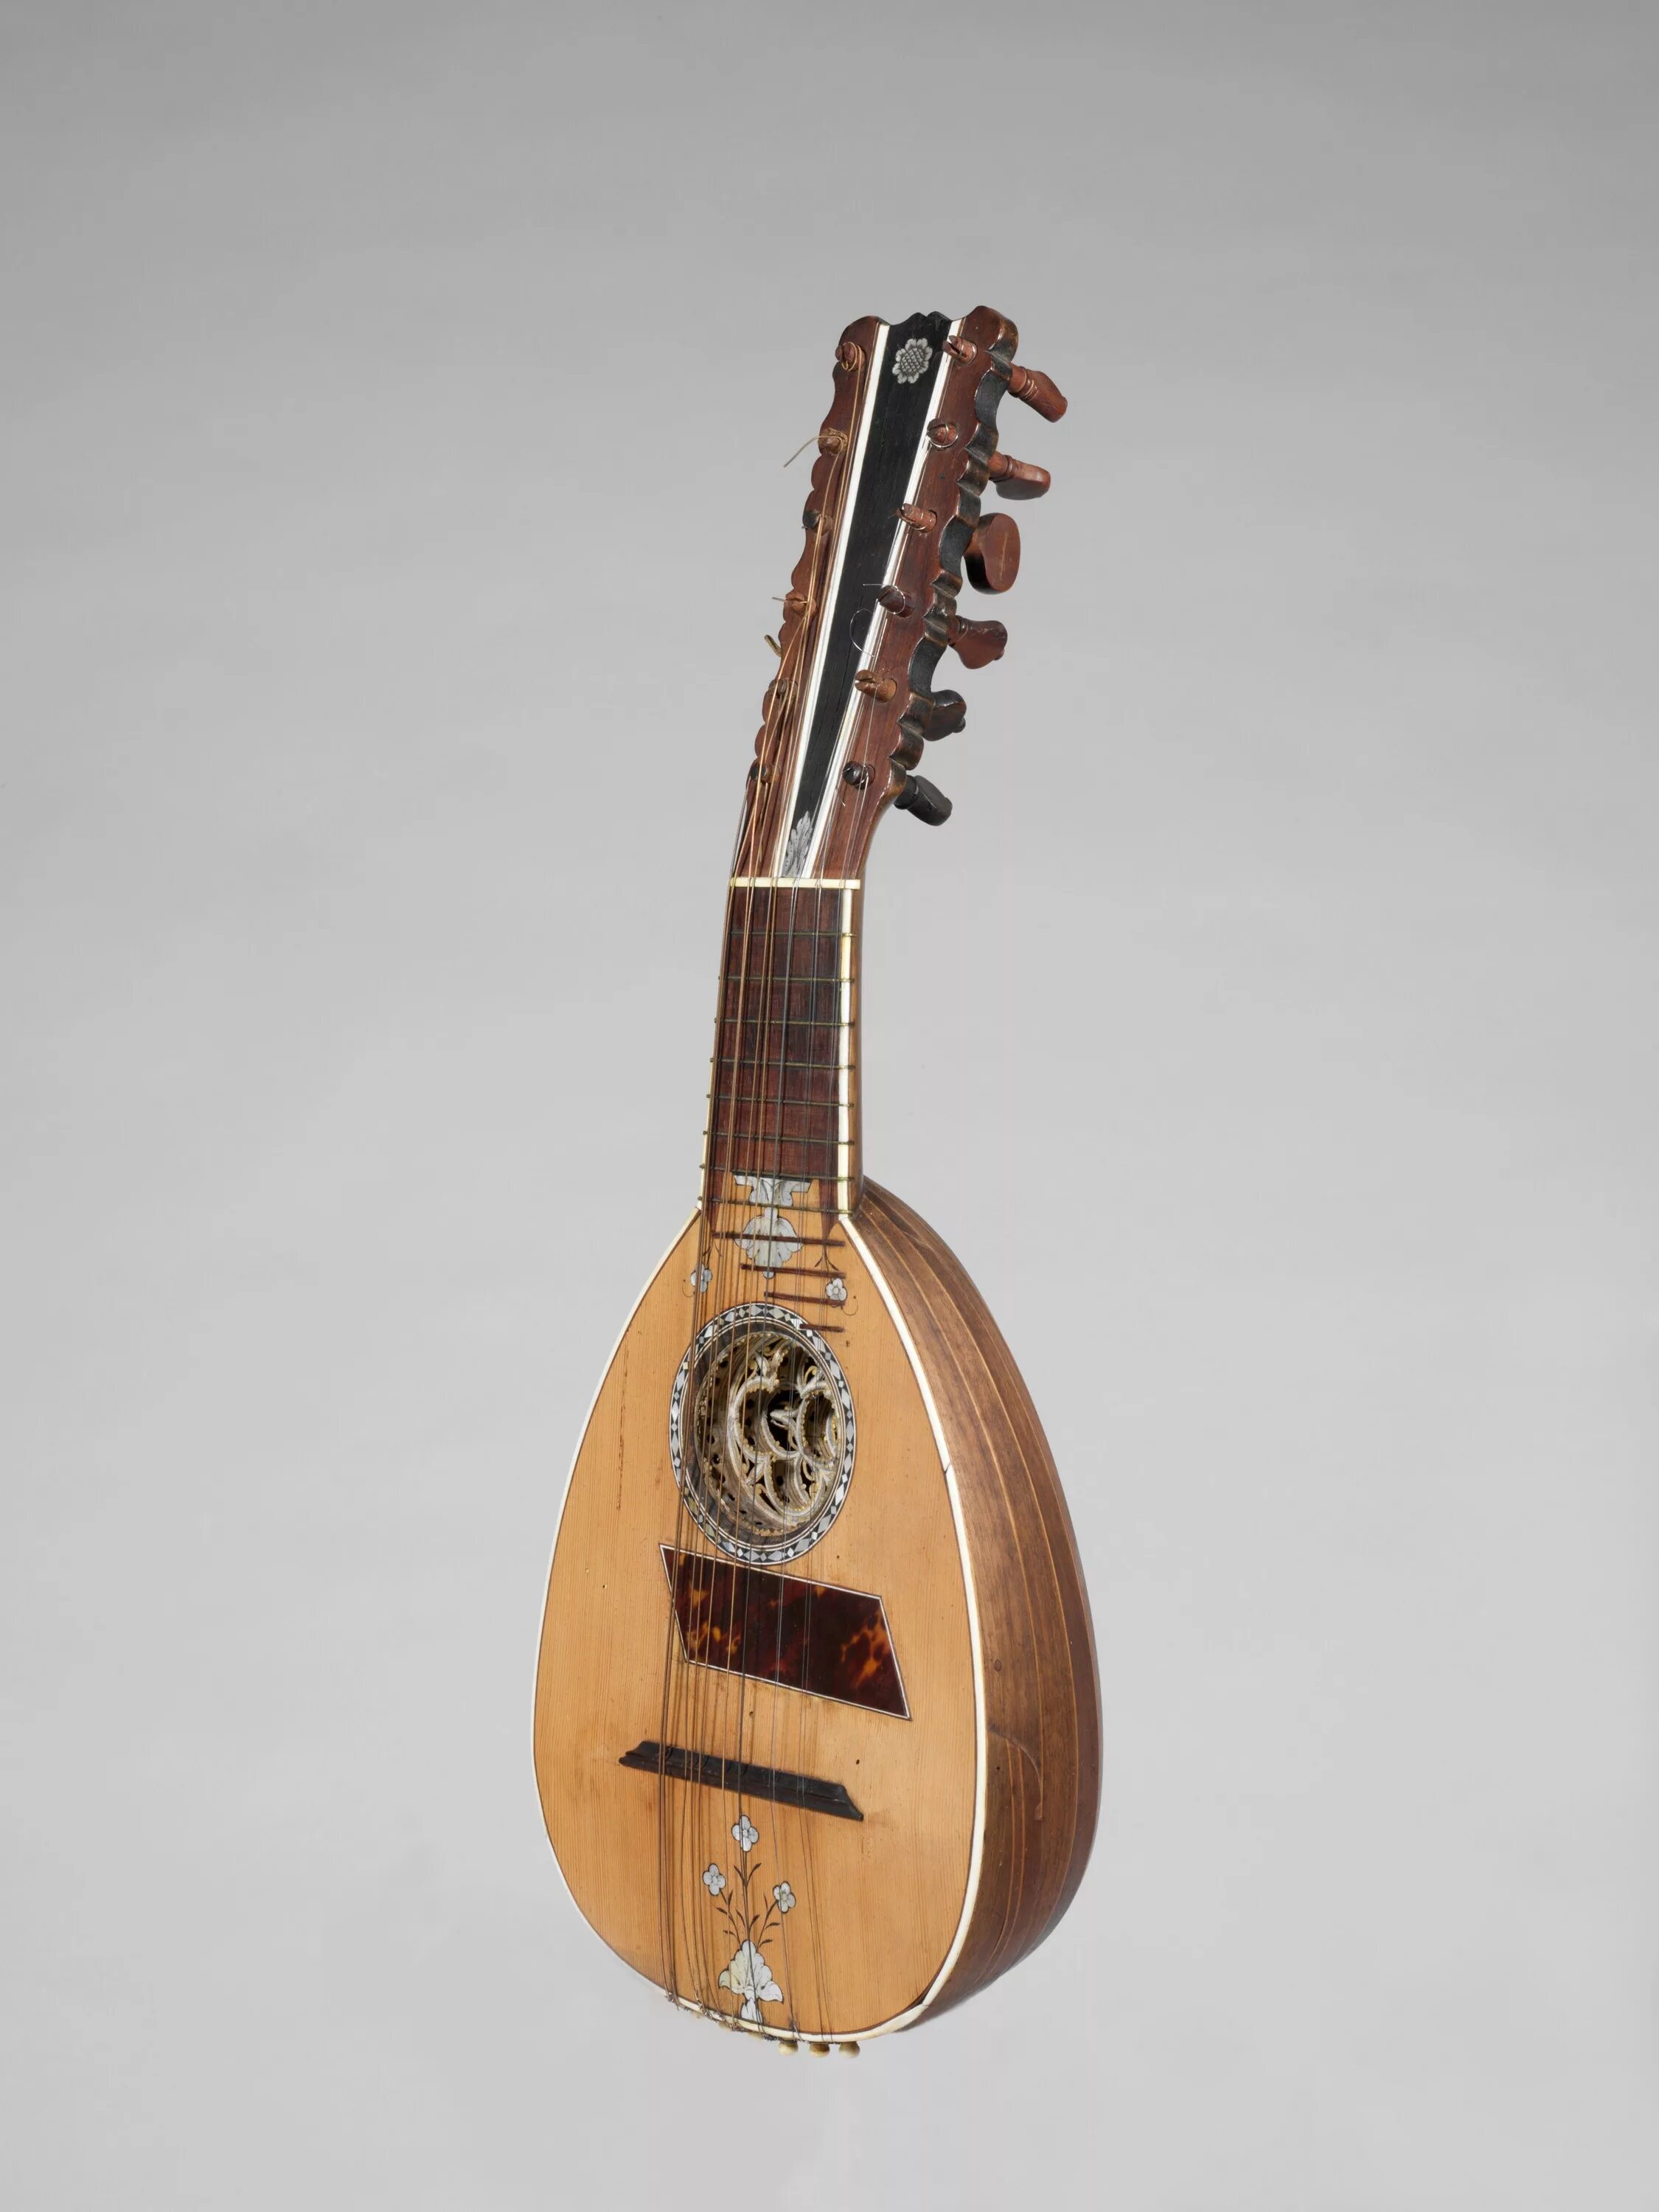 Мандолина это. Мандолина 19 века. Мандолина 12 струн. Инструмент Италии мандолина. Неаполитанская мандолина.